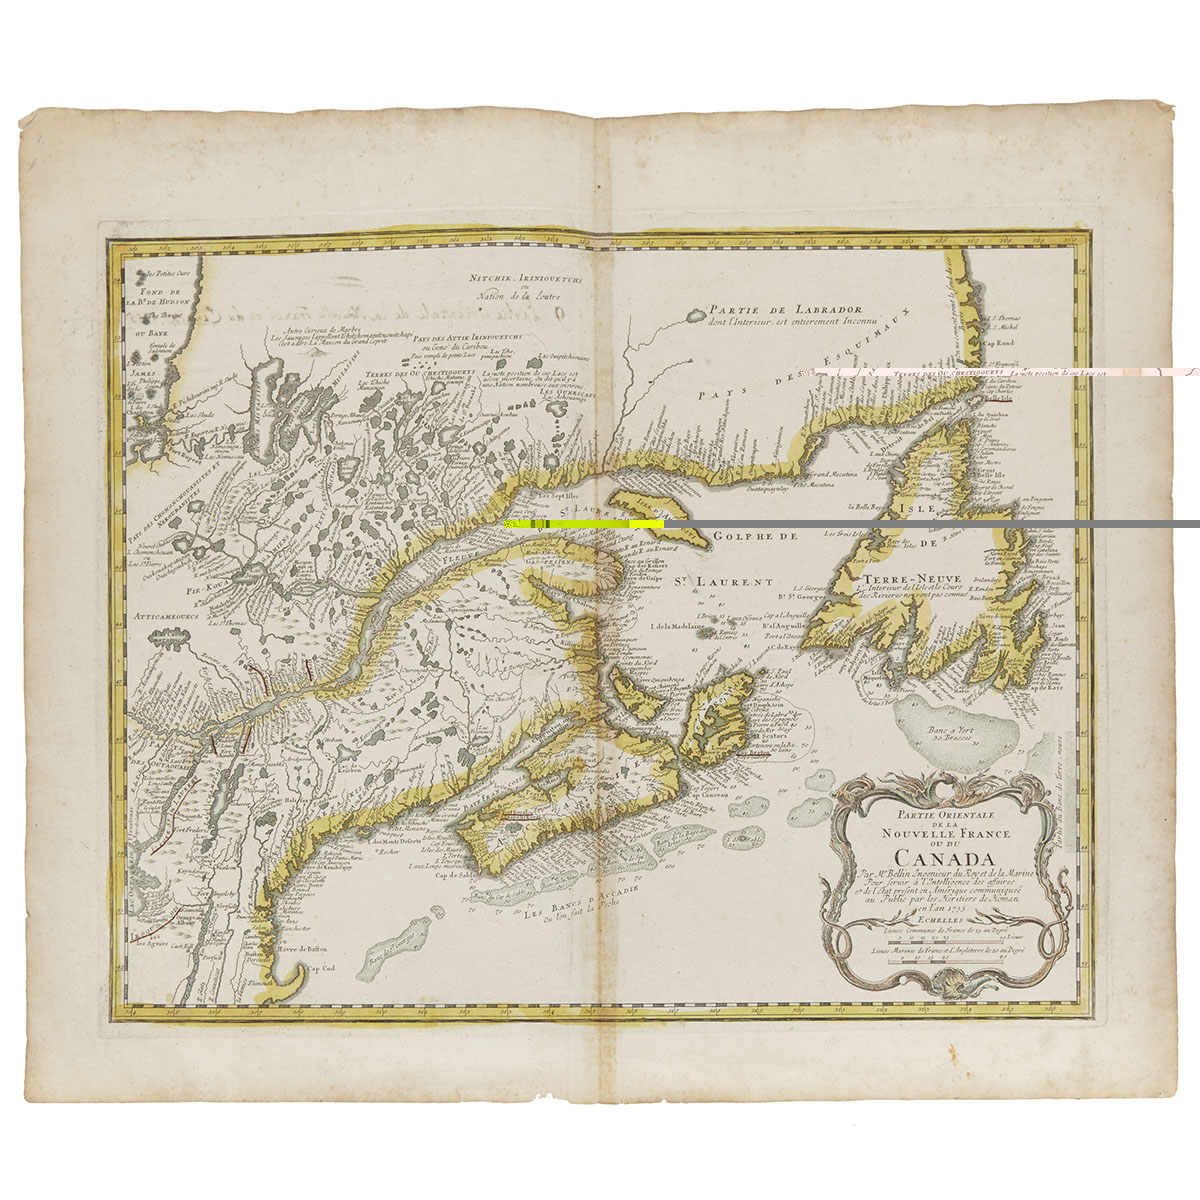 Pair of Maps of Canada, Jacques Nicolas Bellin, 1755